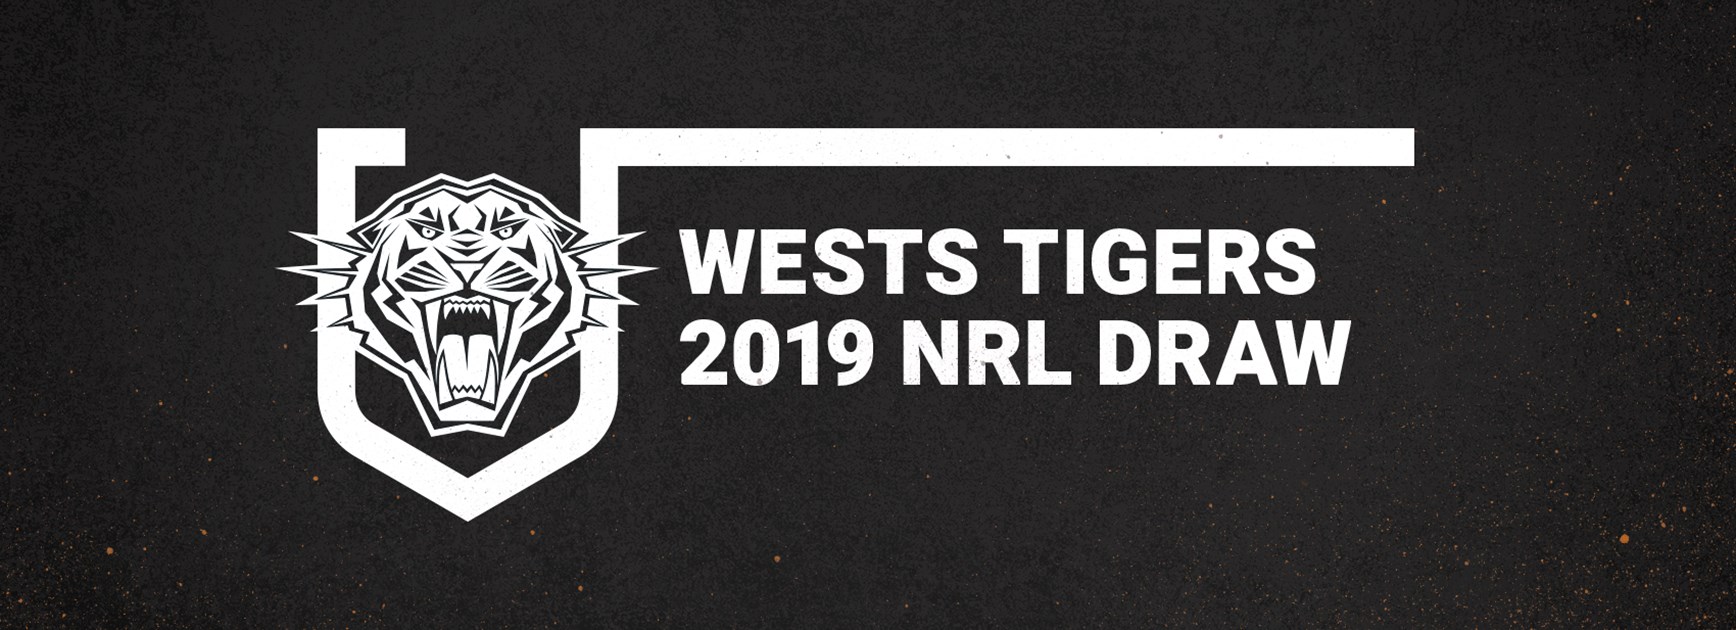 Wests Tigers 2019 NRL Draw